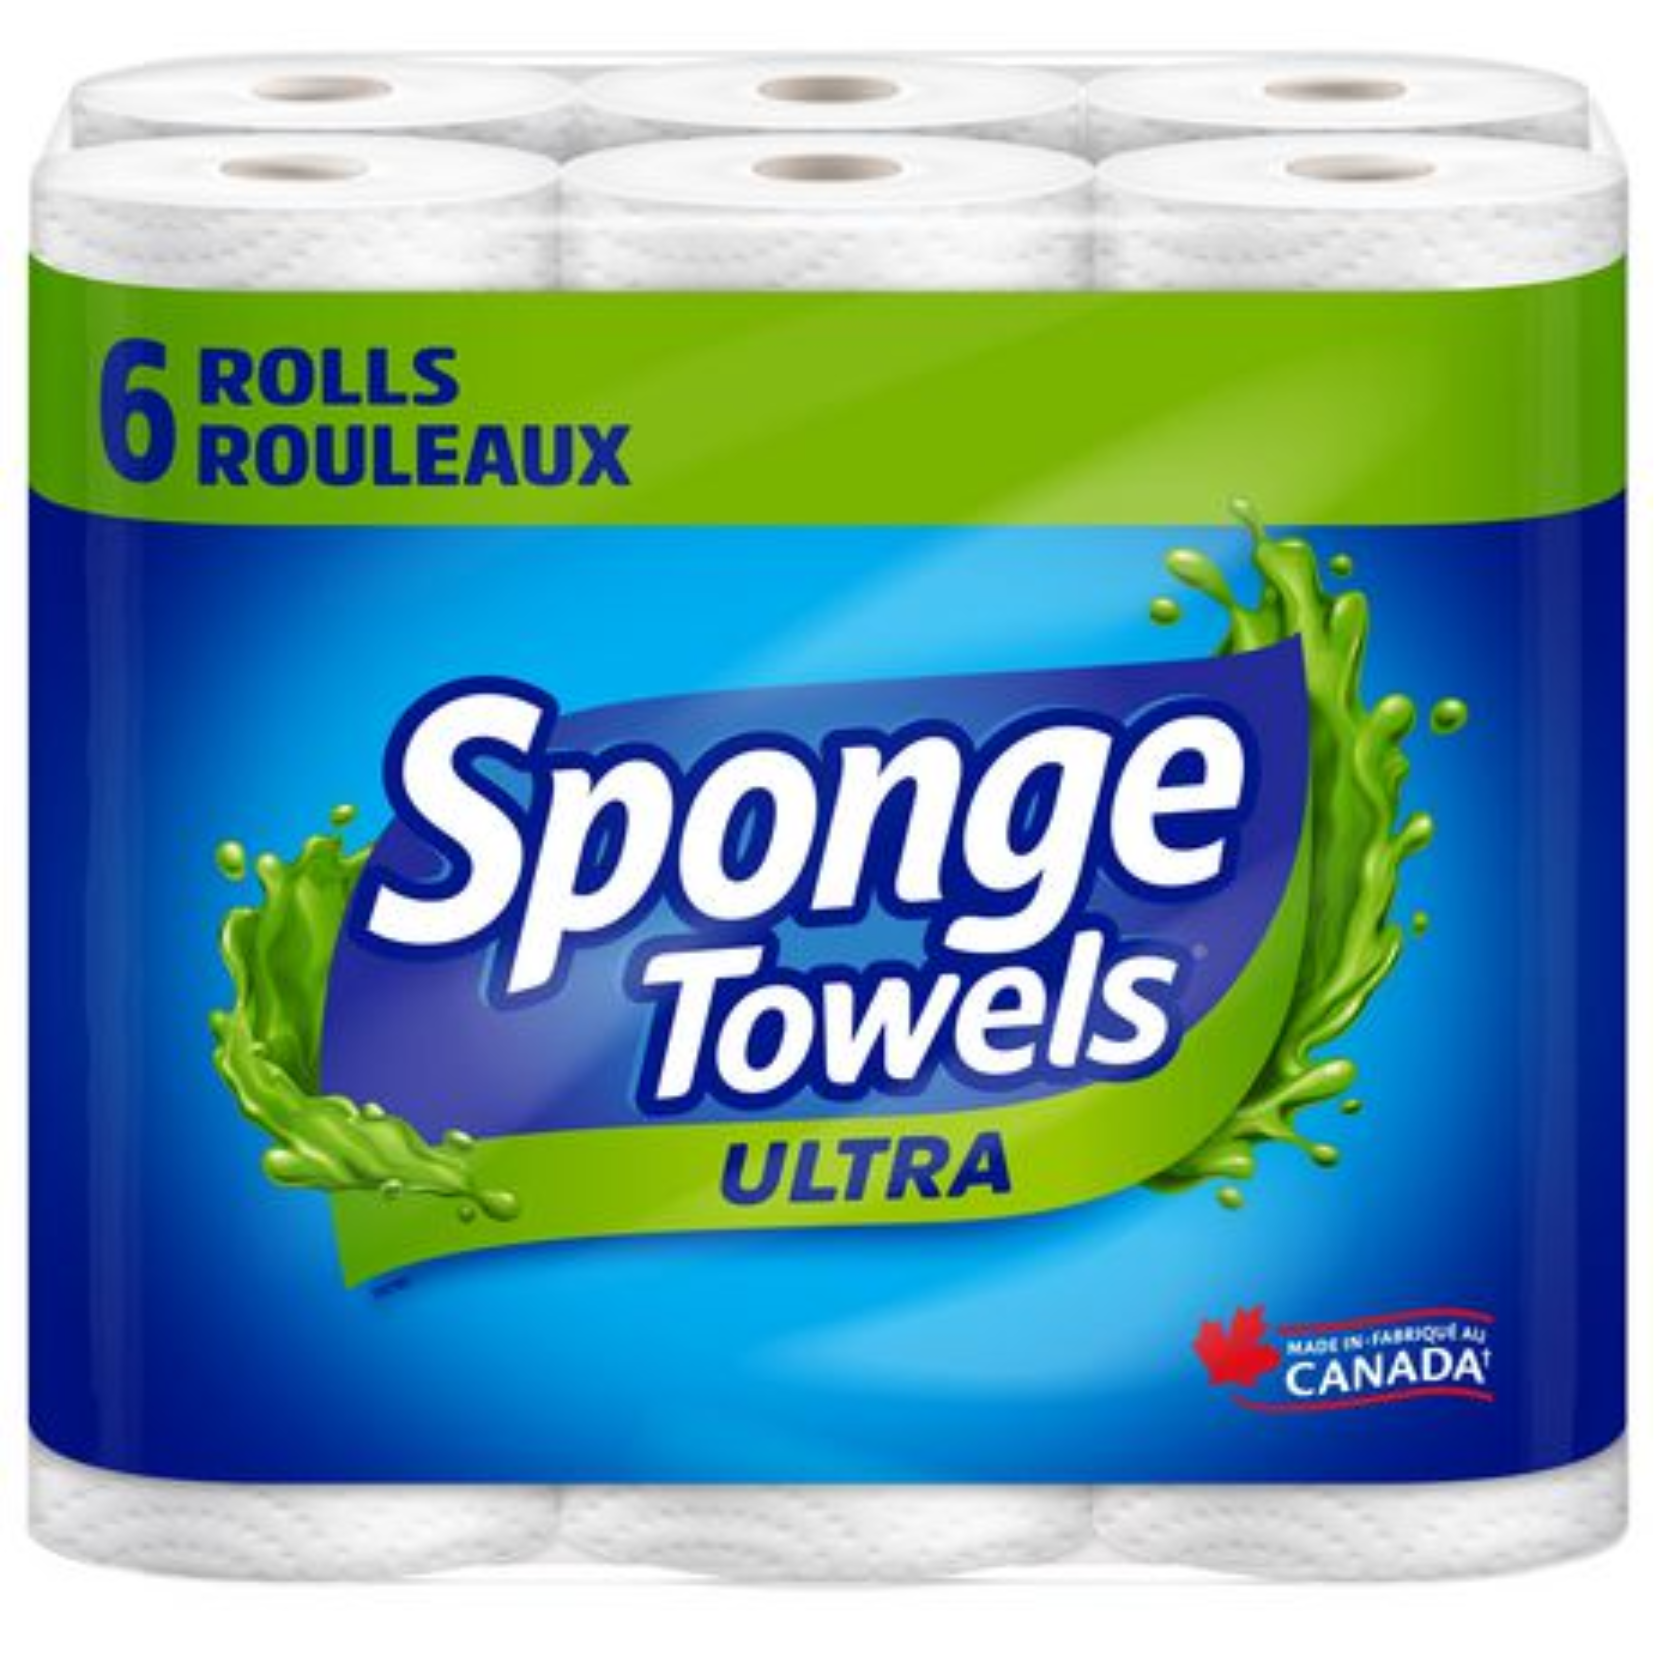 Sponge Towels Choose-A-Size Paper Towel Roll 6ct